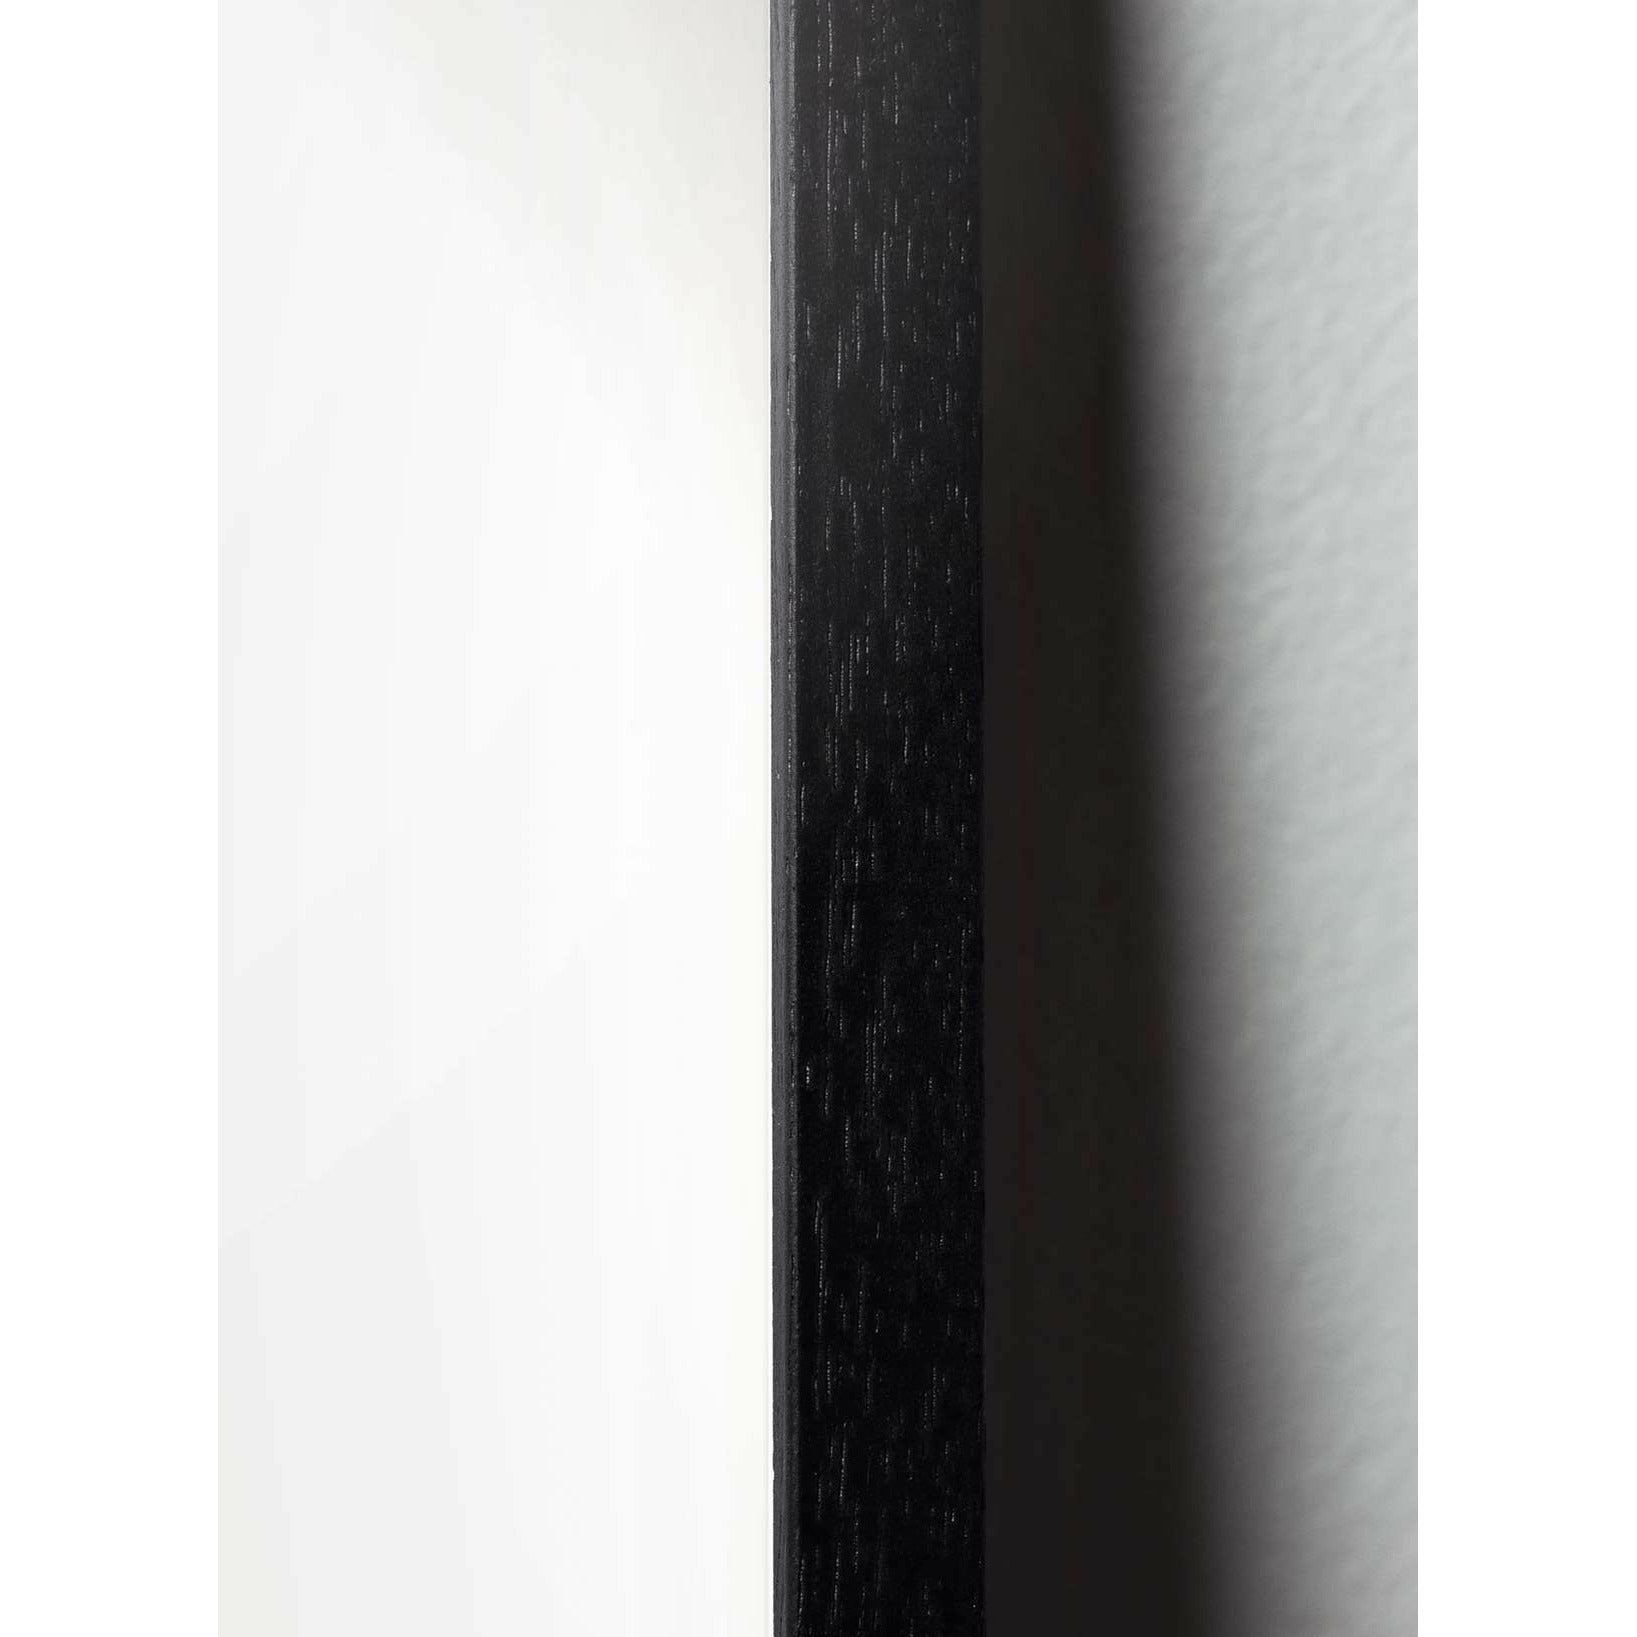 Brainchild Äggklassisk affisch, ram i svart -målat trä 70x100 cm, mörkblå bakgrund